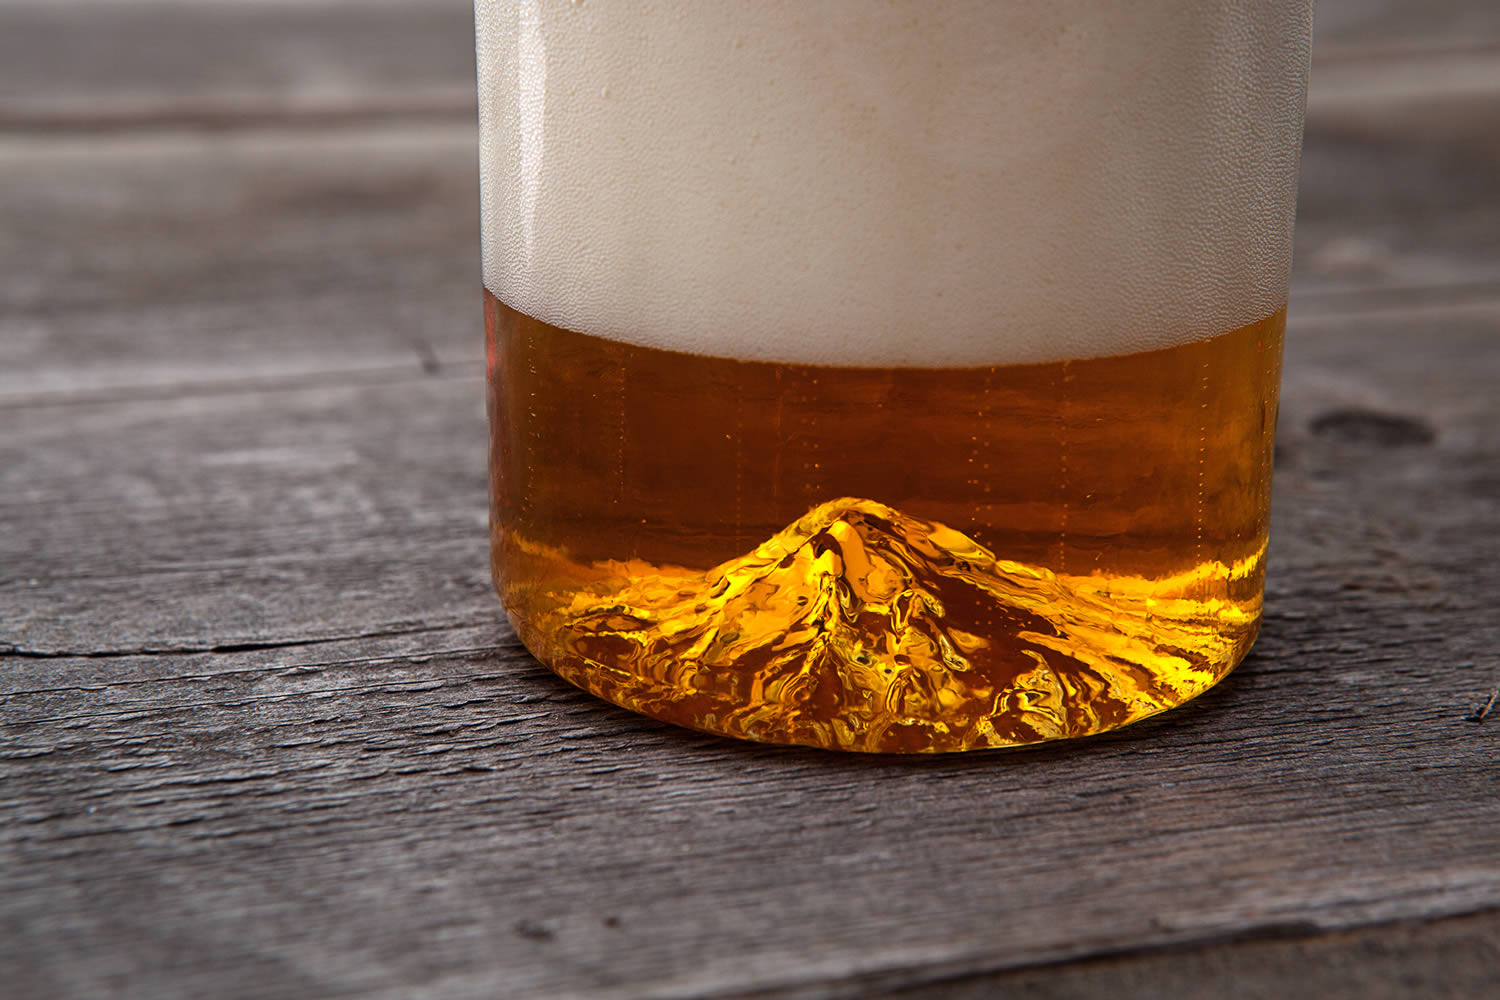 NORTH DRINKWARE : Mt. Hood, The Oregon Pint Glass